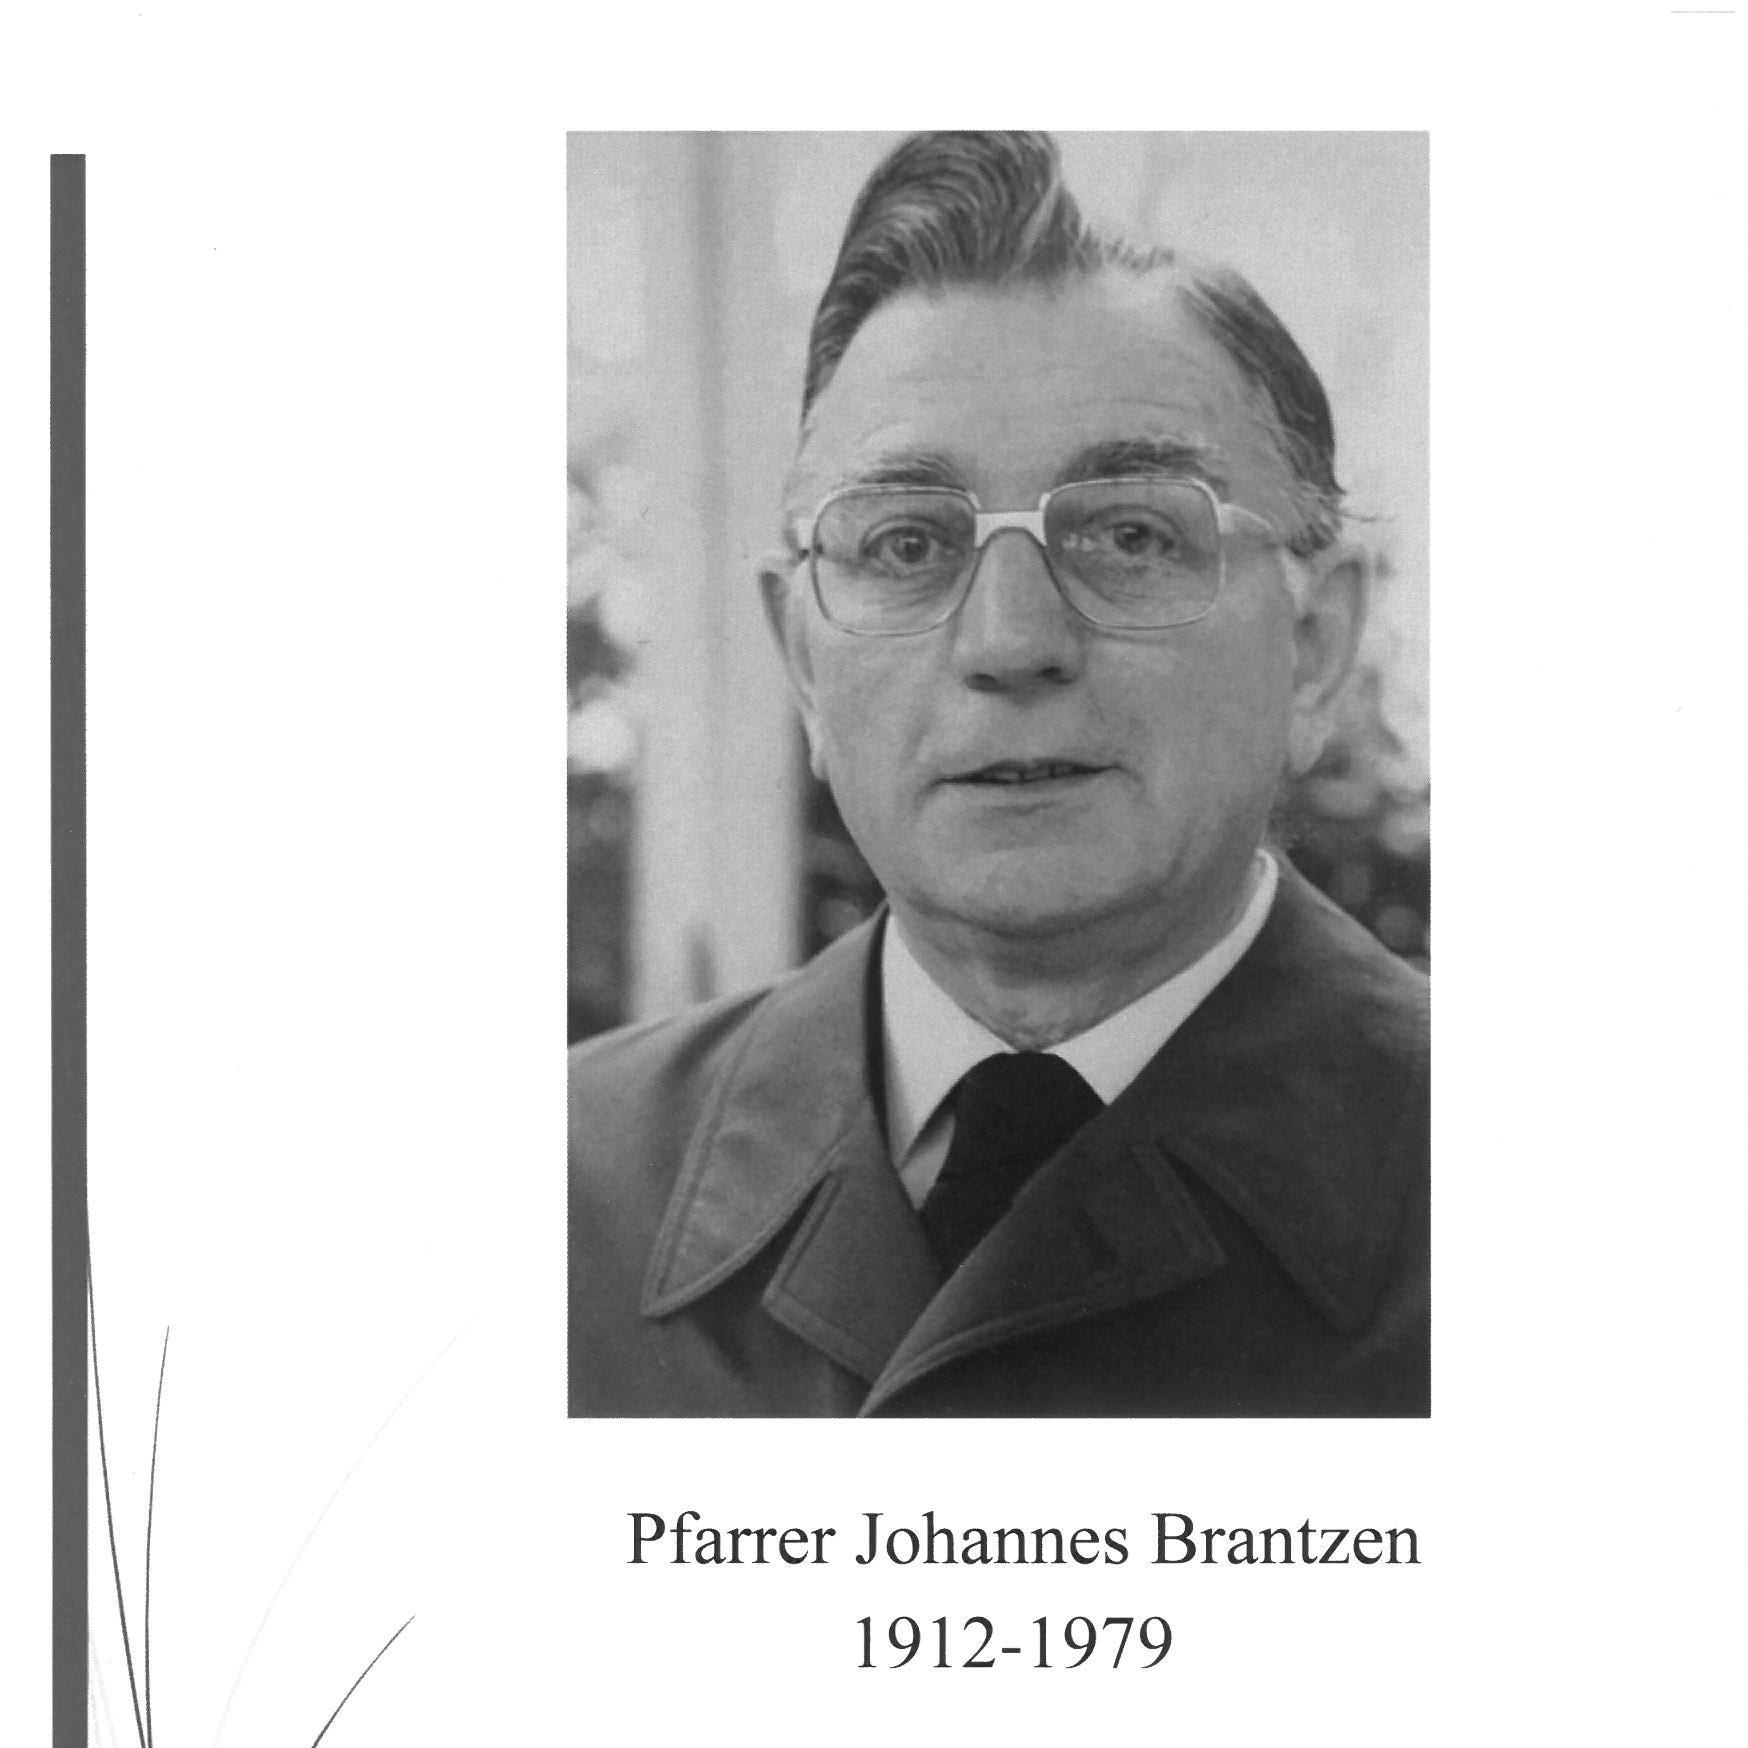 Pfr. Johannes Brantzen